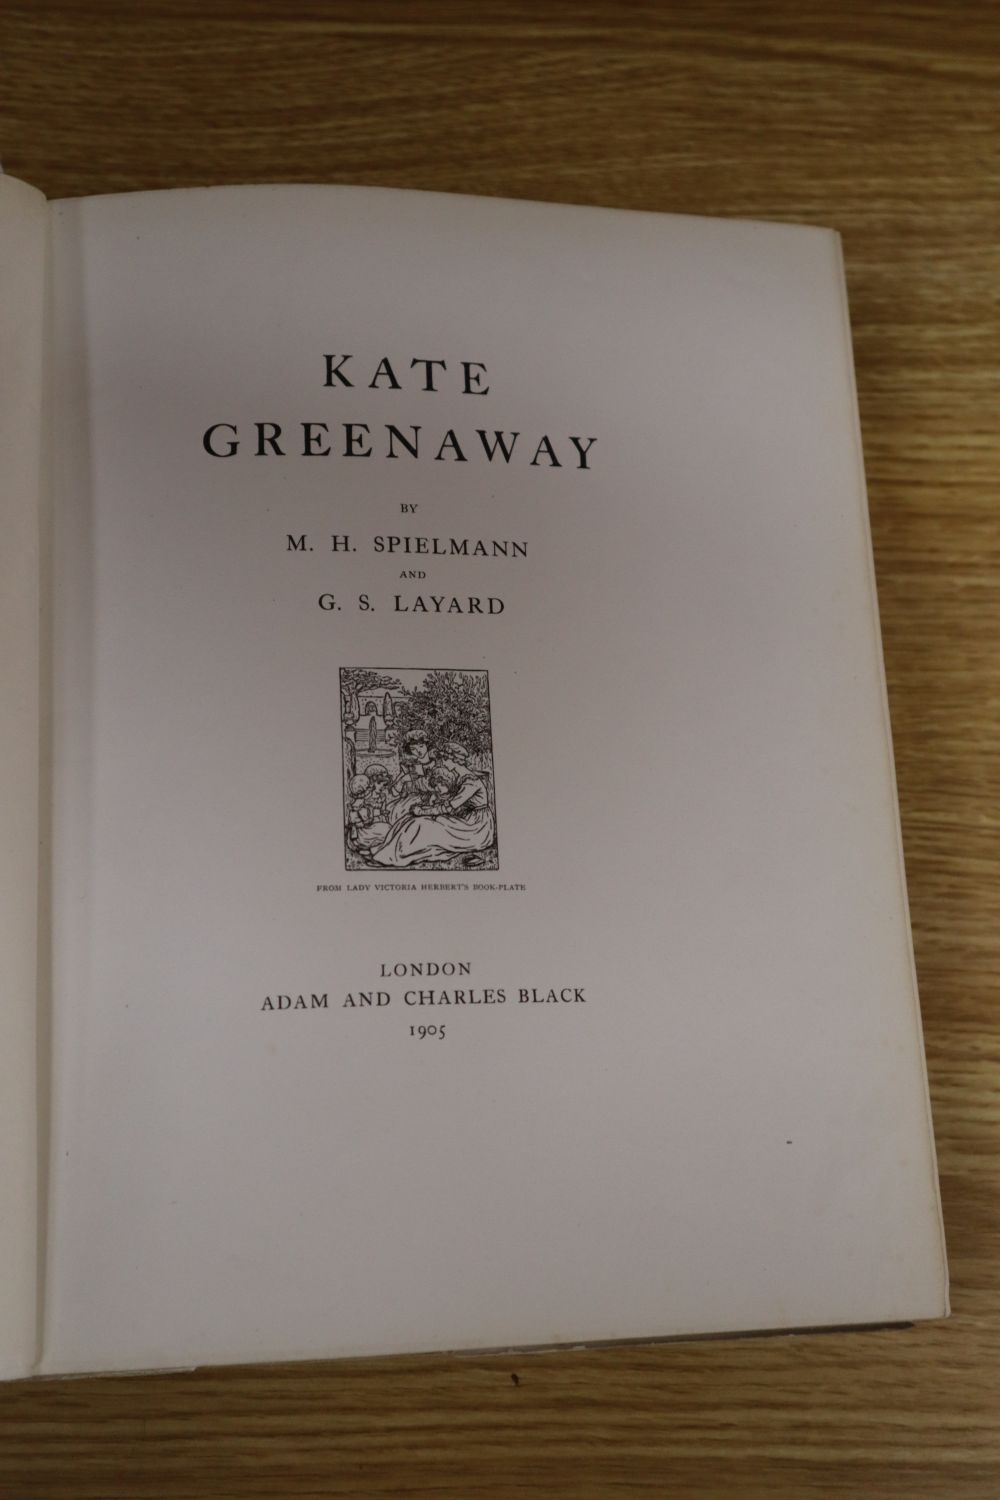 Spielmann (M. H.) & Layard (G. S.), Kate Greenaway, Edition De Luxe numbered 423/500,